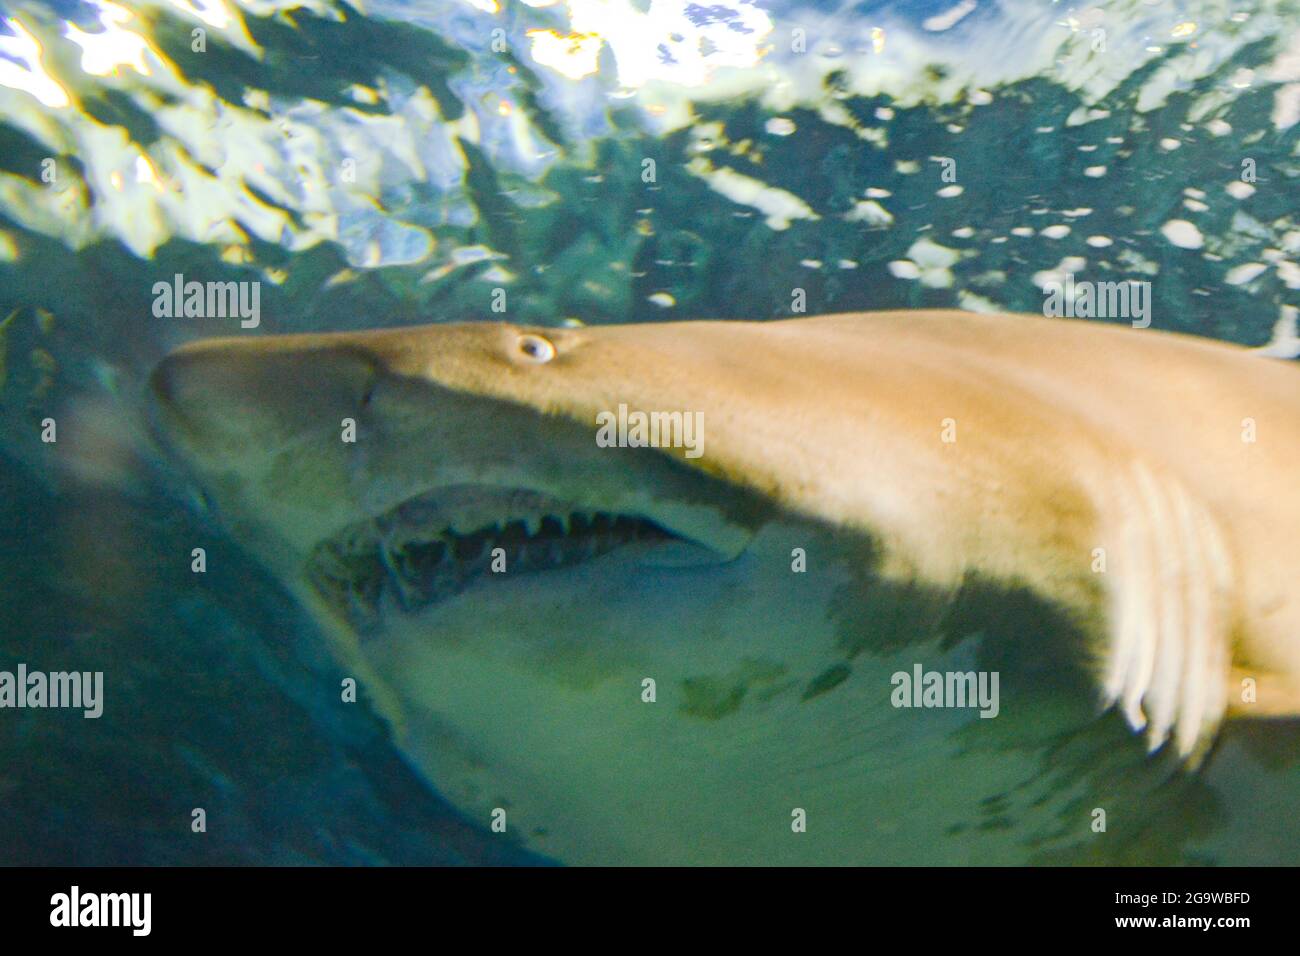 Bangkok Aquarium Marine Life Stock Photo